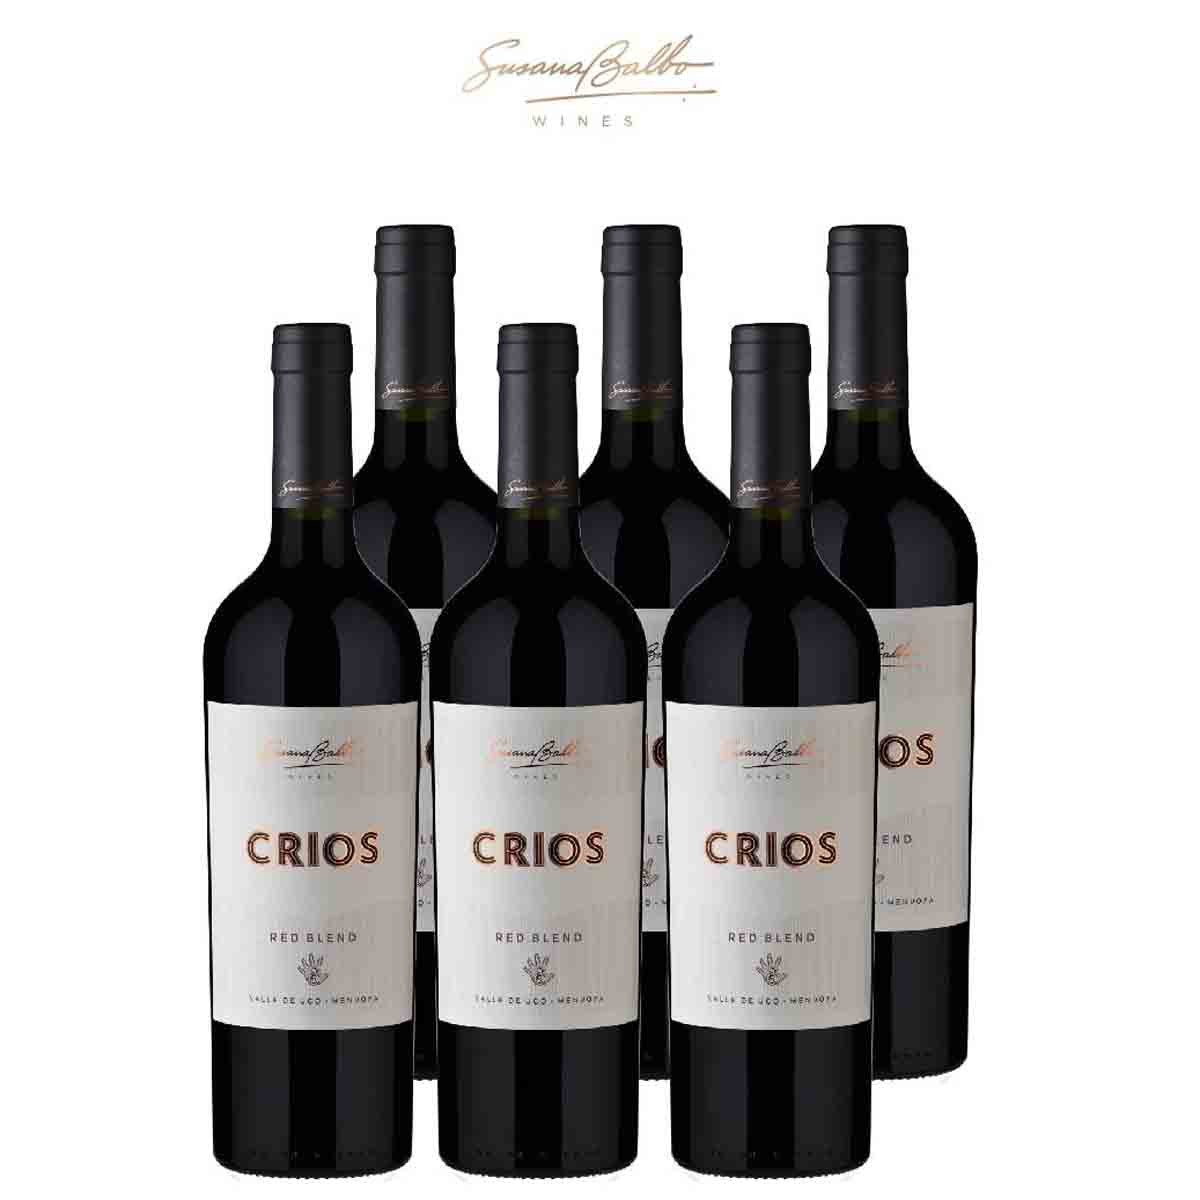 Caixa de 6 Vinhos Tinto Argentino Susana Balbo Crios Red Blend 750ml 2017